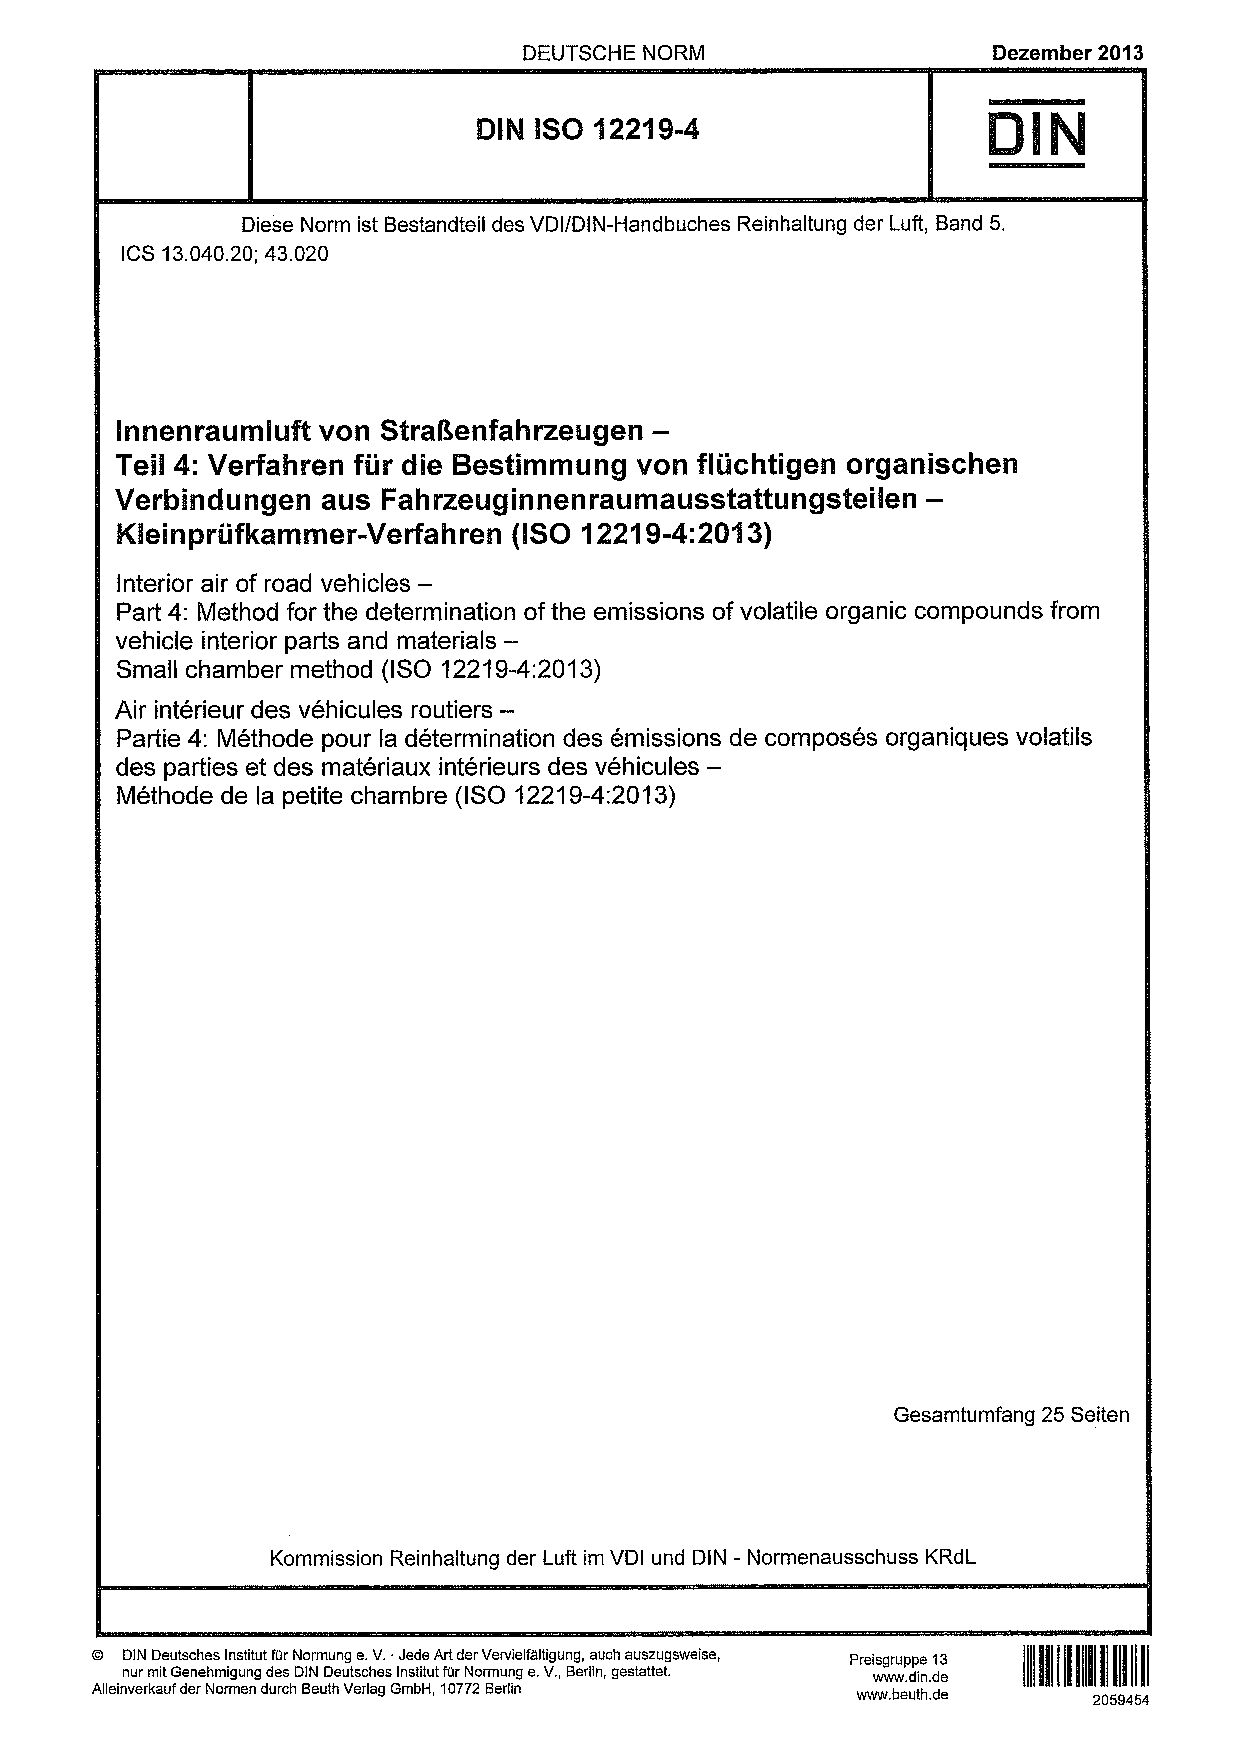 DIN ISO 12219-4:2013